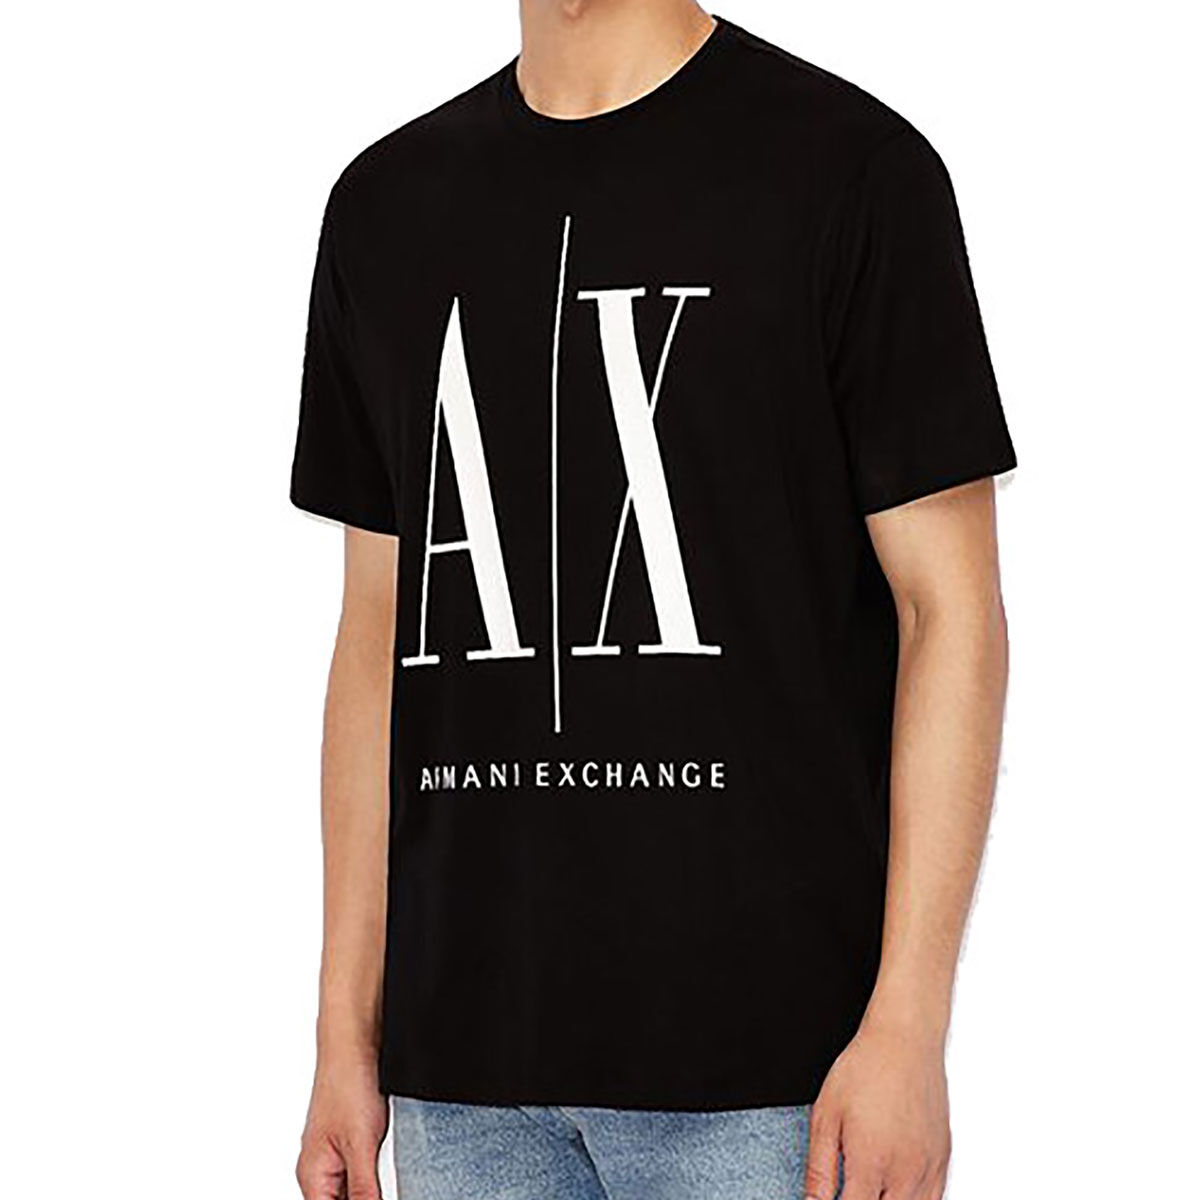 【 ARMANI EXCHANGE 】 AX アルマーニ エクスチェンジ ビッグロゴプリント Tシャツ ARMANI EXCHANGE BIG  LOGO TEE